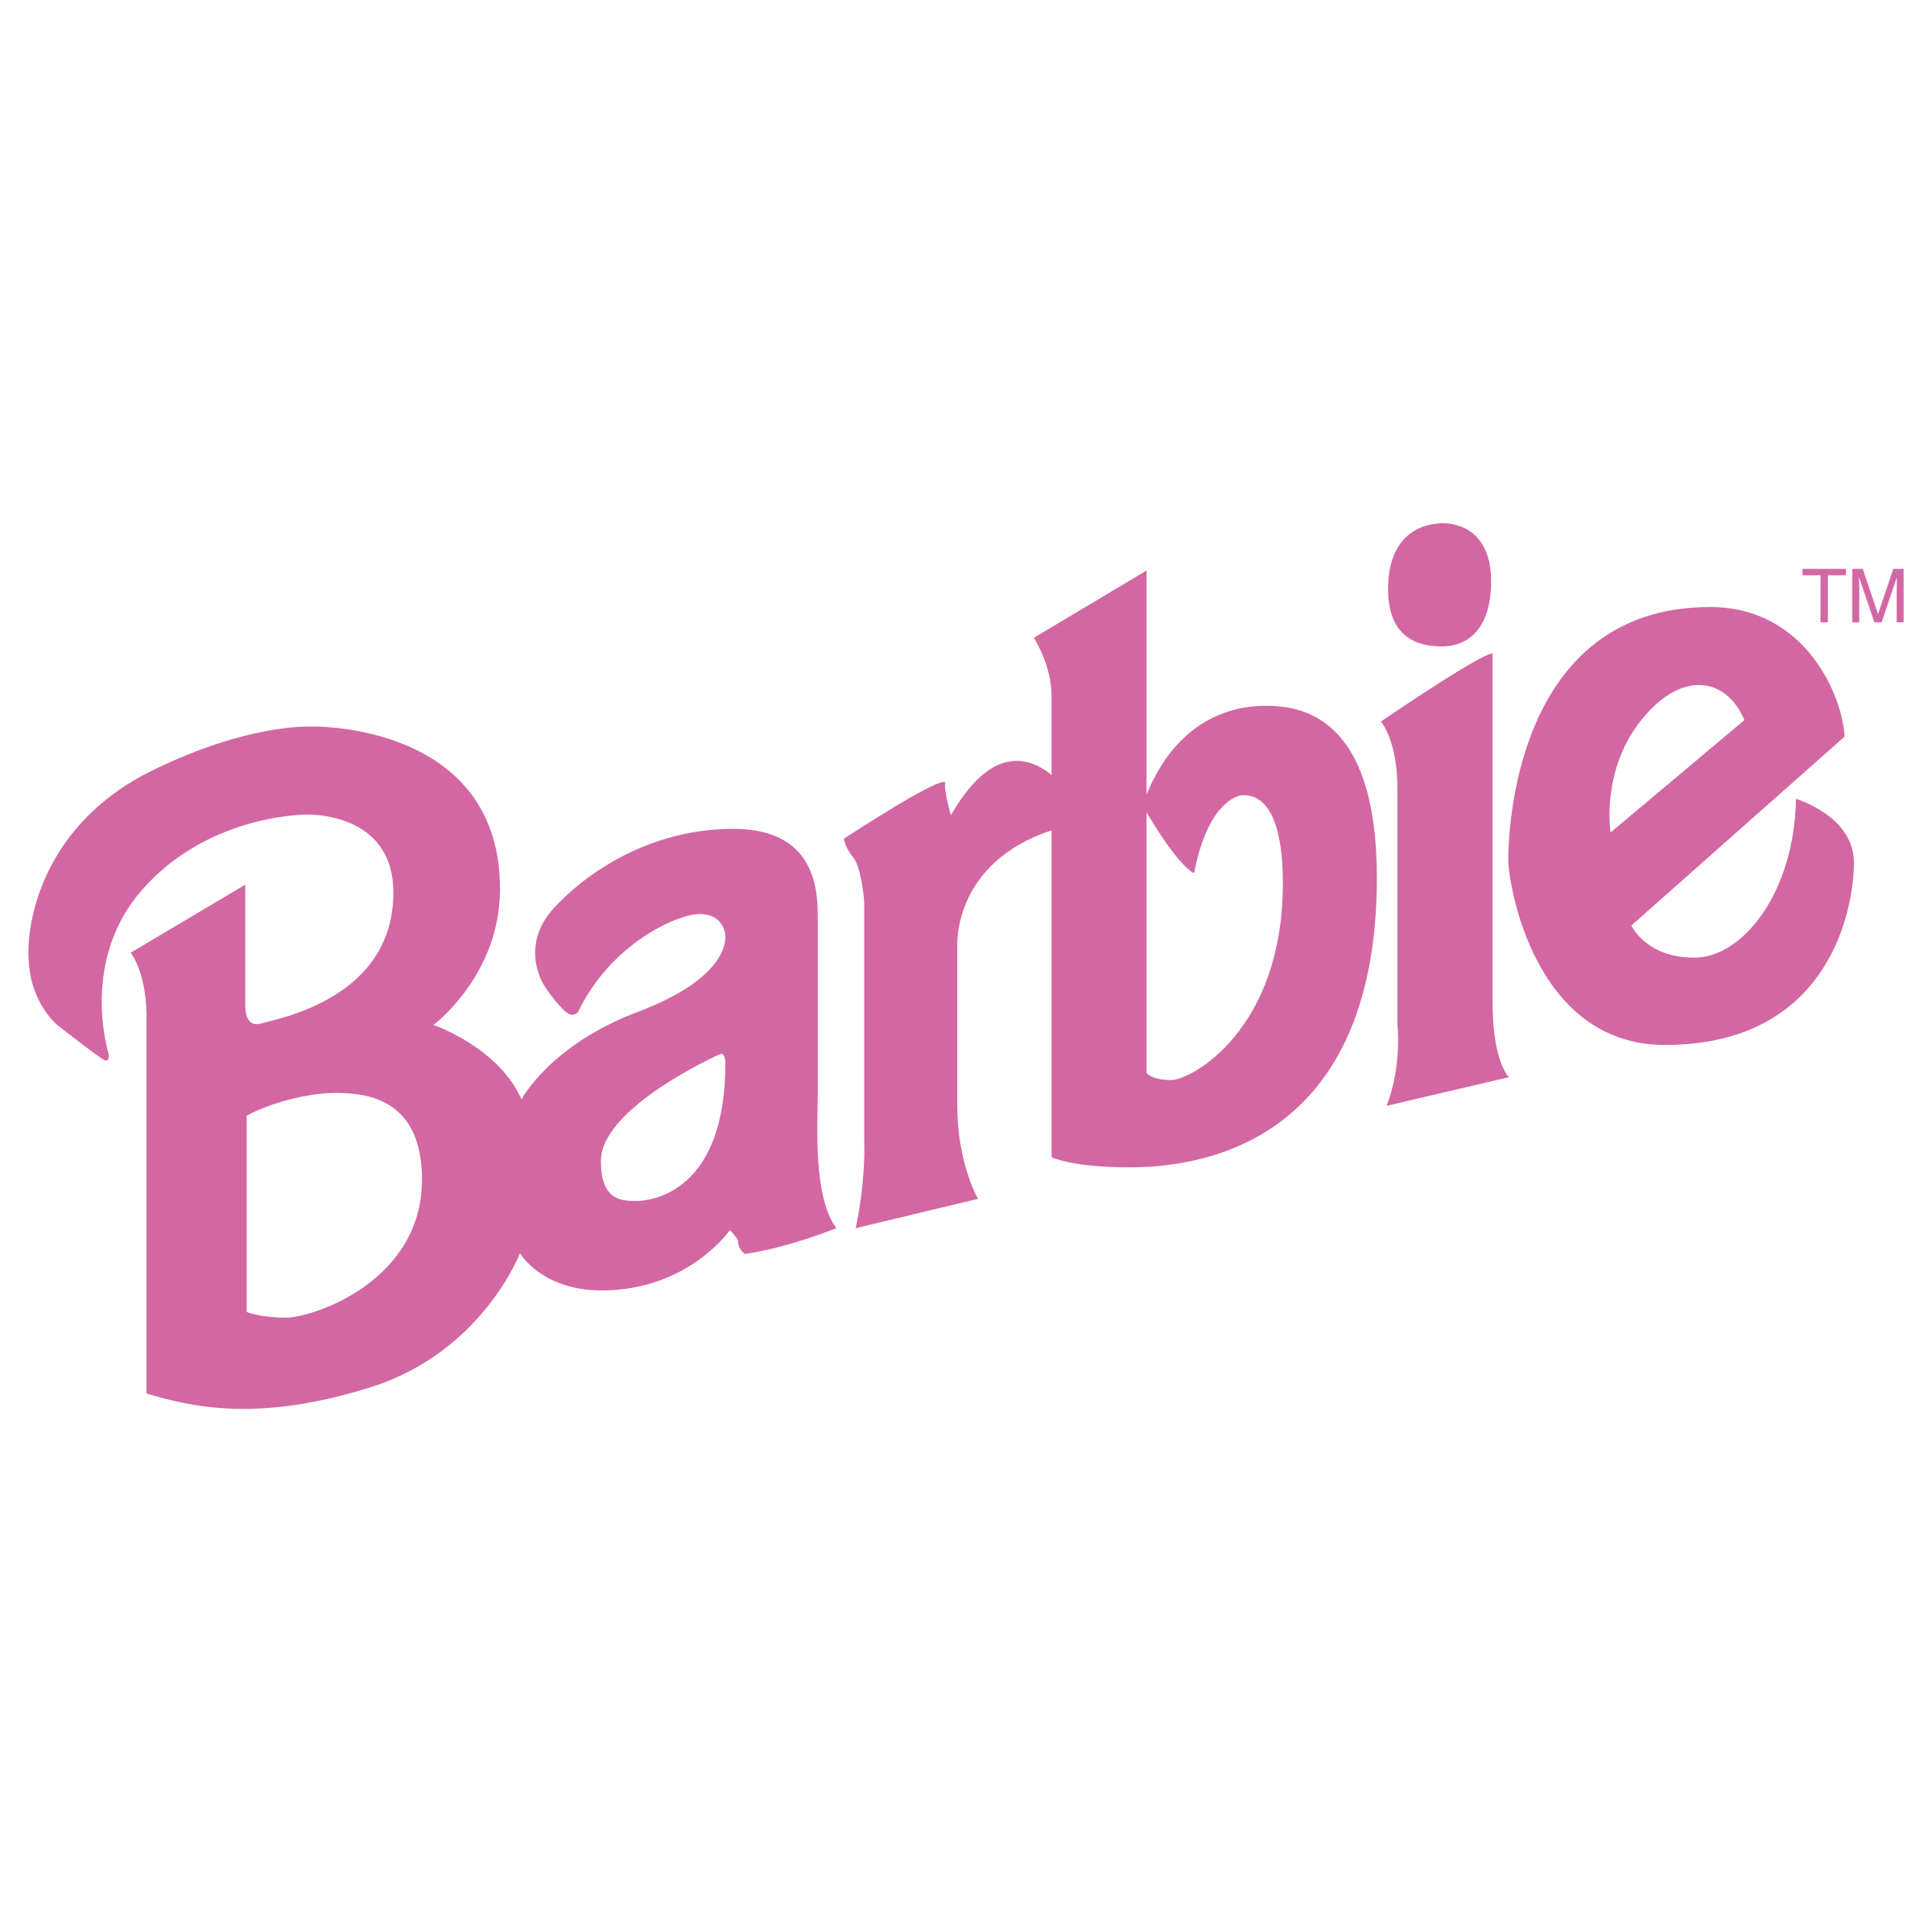 Барби надпись на черном фоне